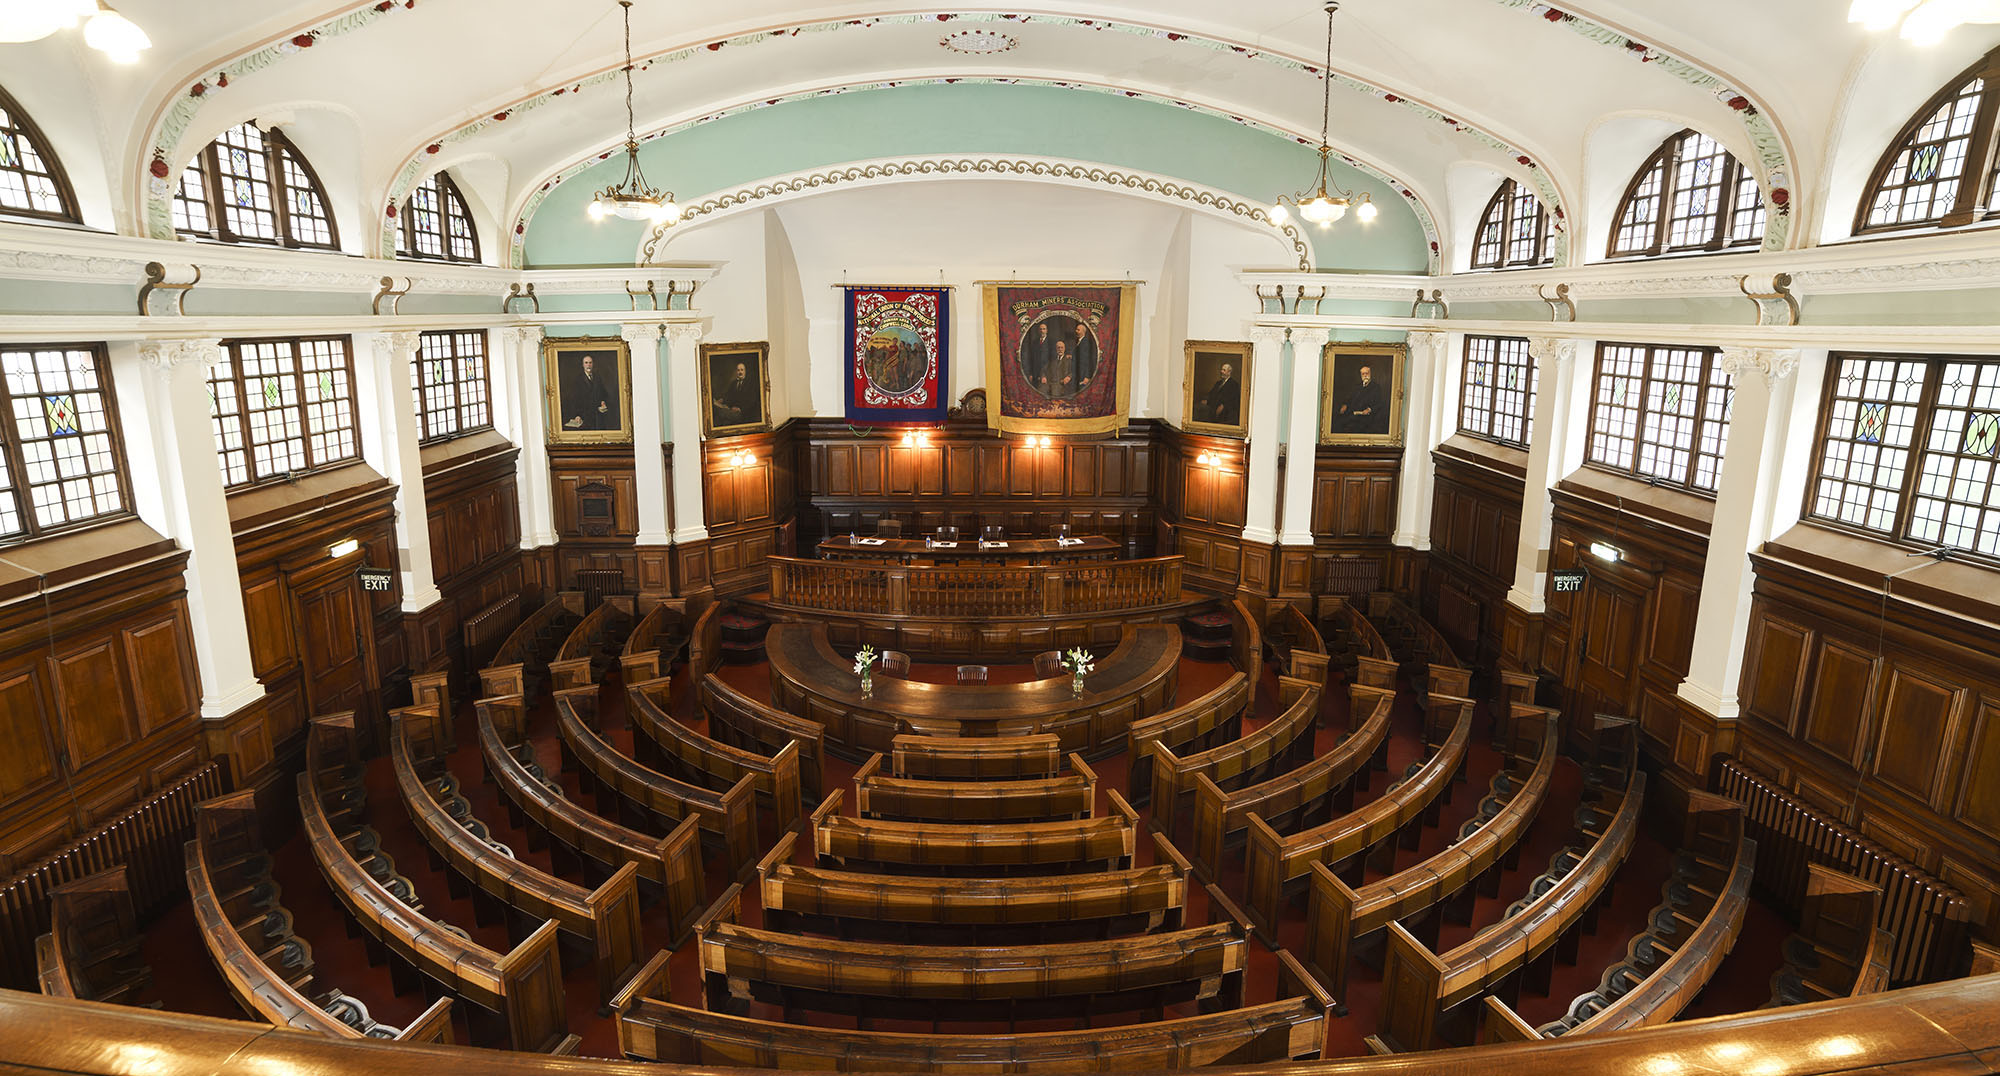 Debating chamber inside the Pitman's Parliament